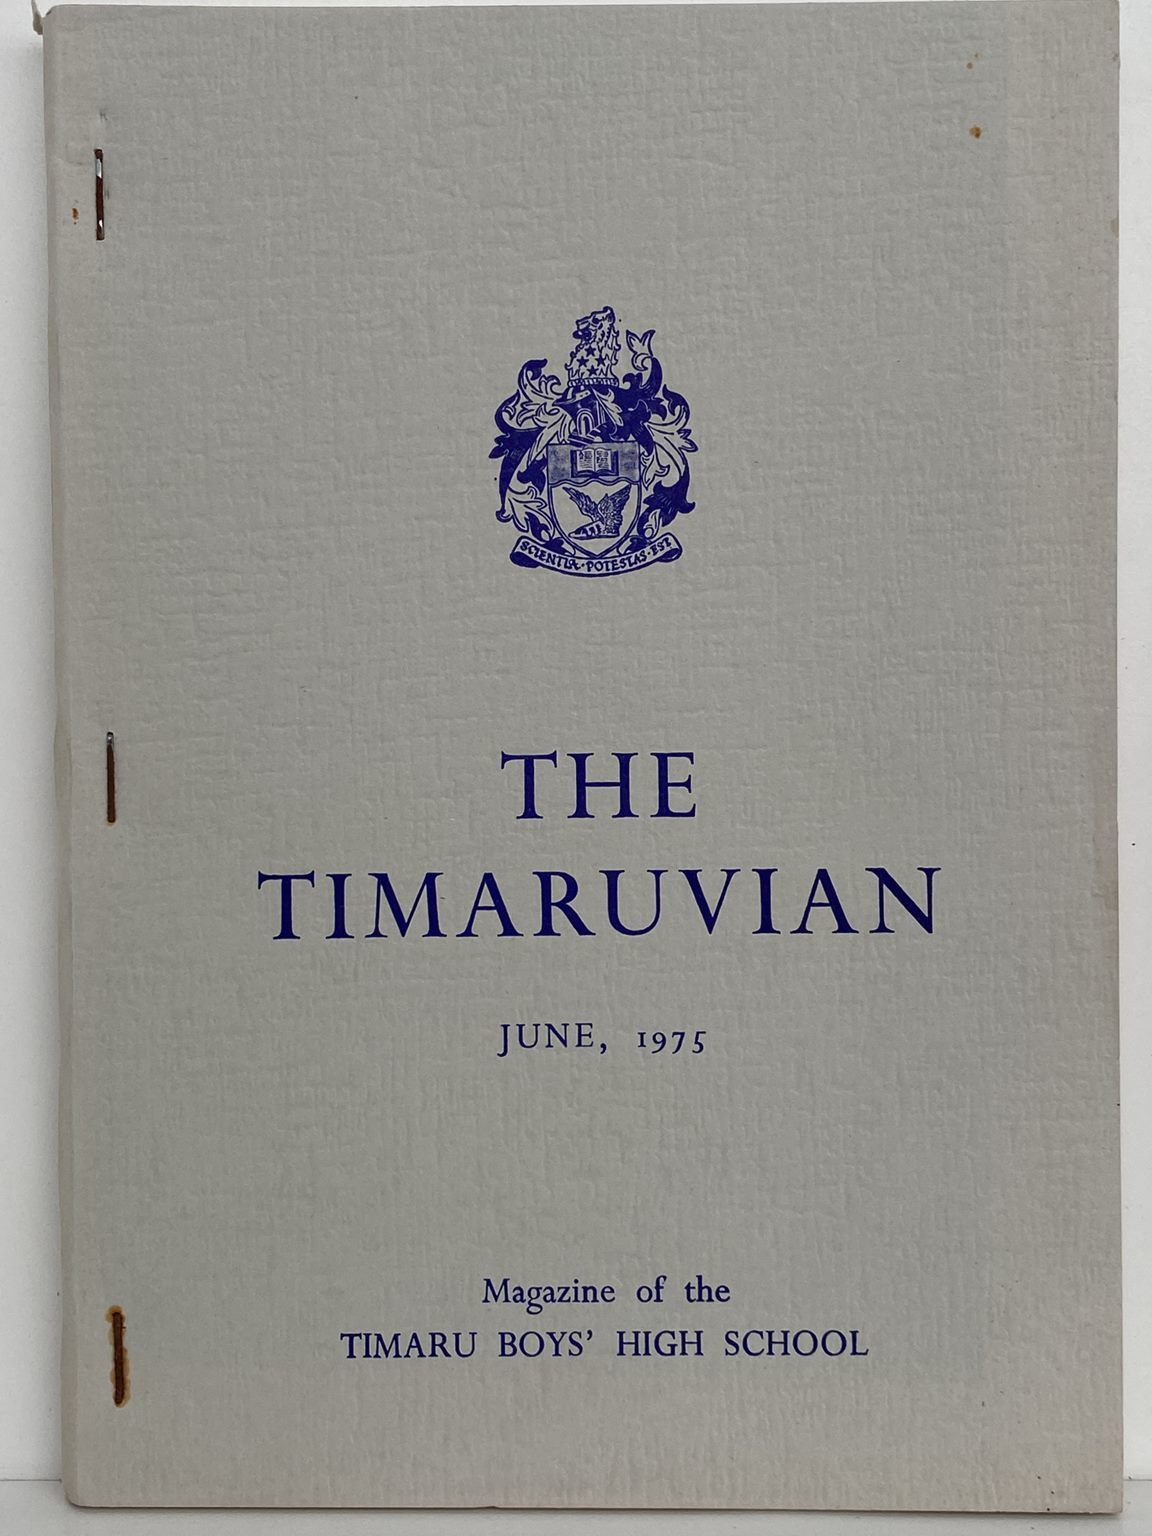 THE TIMARUVIAN: Magazine of the Timaru Boys' High School 1975